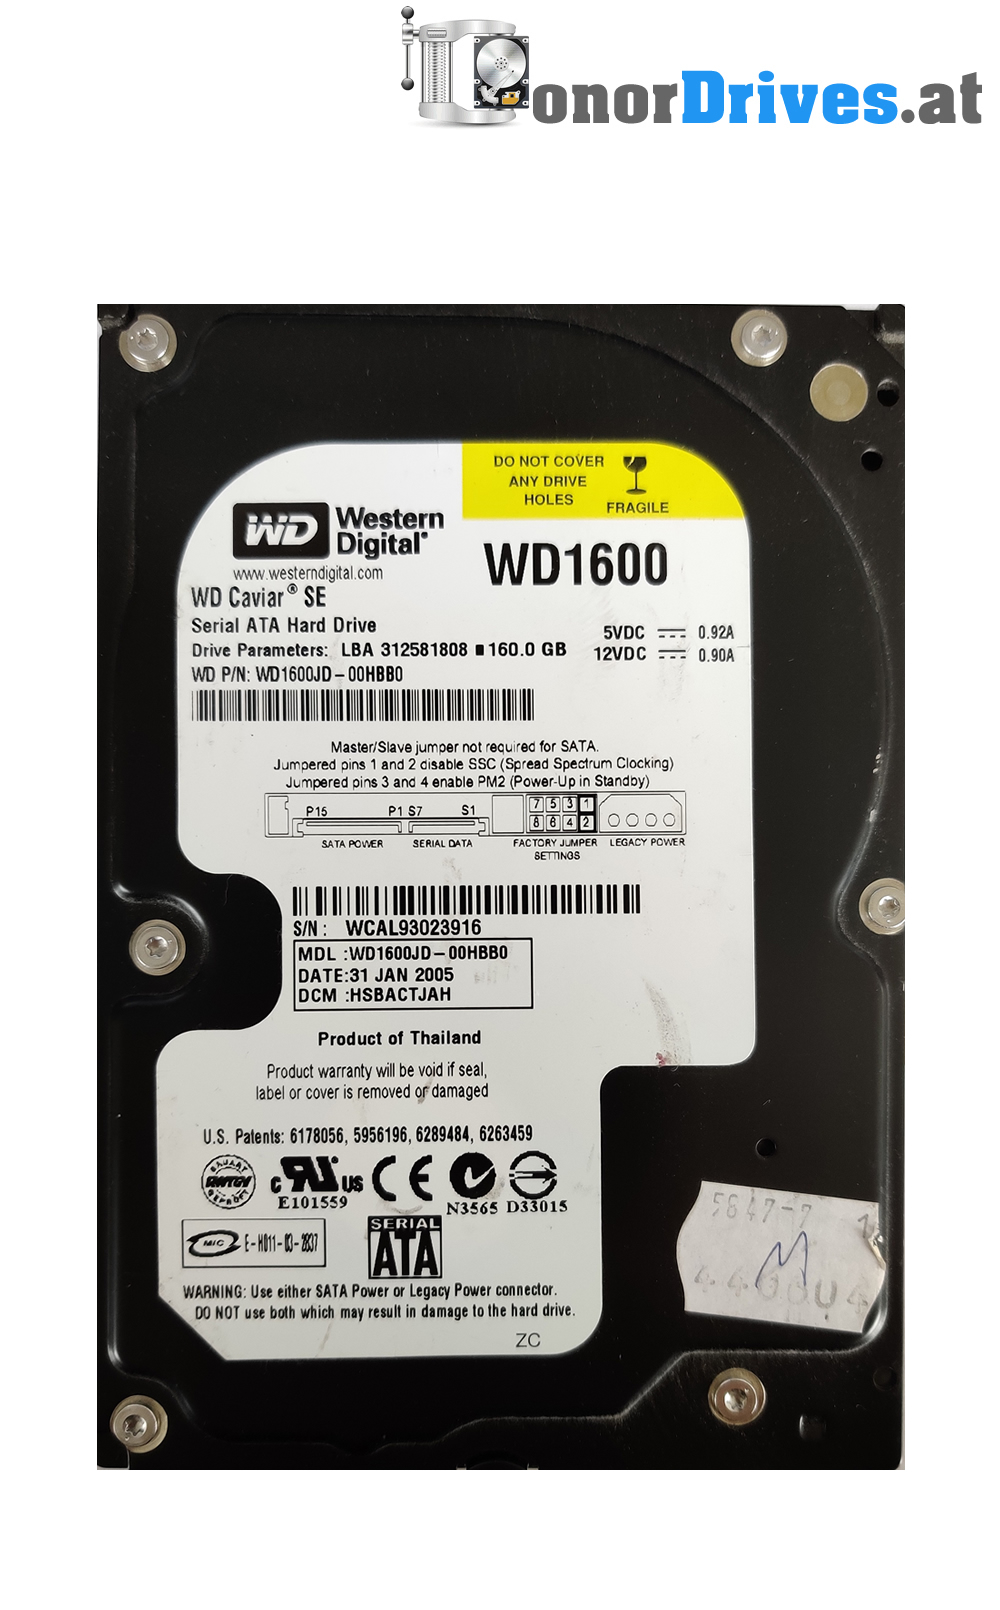 Western Digital WD1600JD-00HBB0 - 160 GB - PCB 2060-001267-001  Rev. A